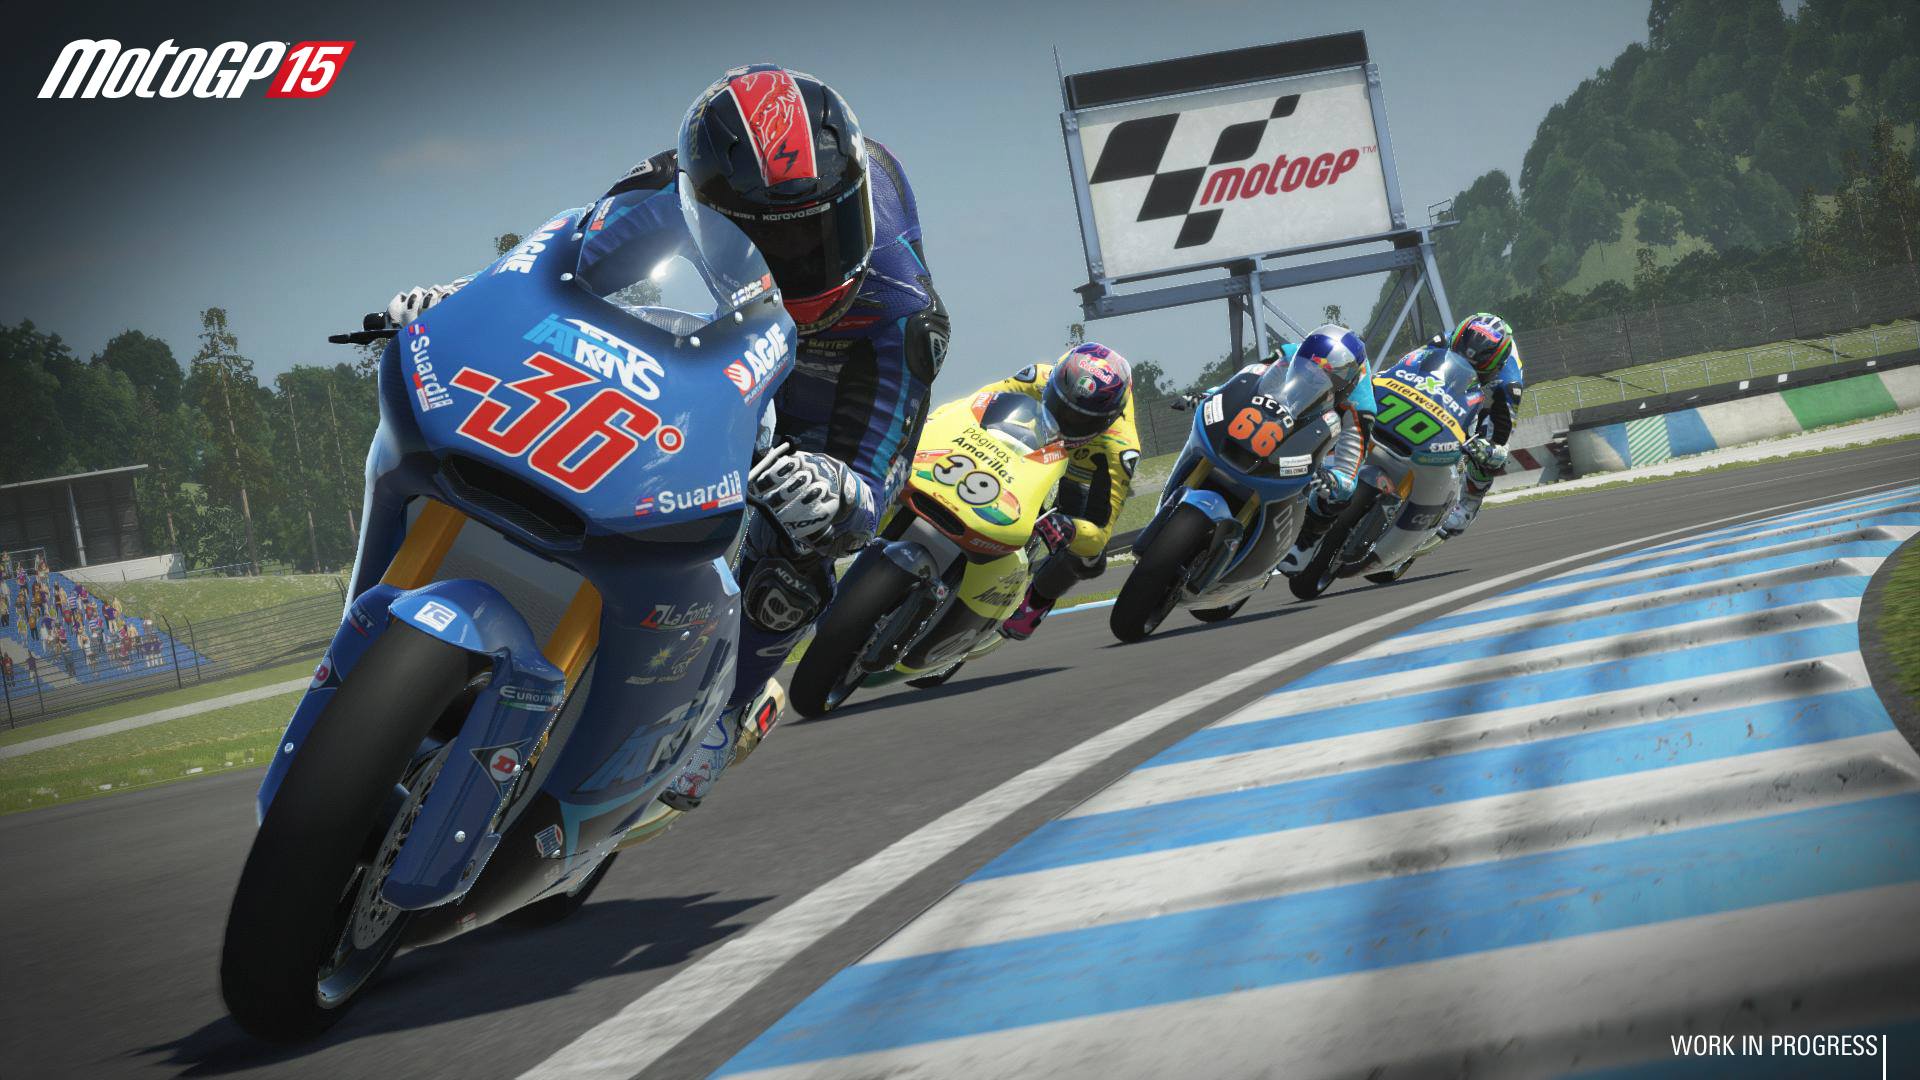 MotoGP 15 Backgrounds on Wallpapers Vista